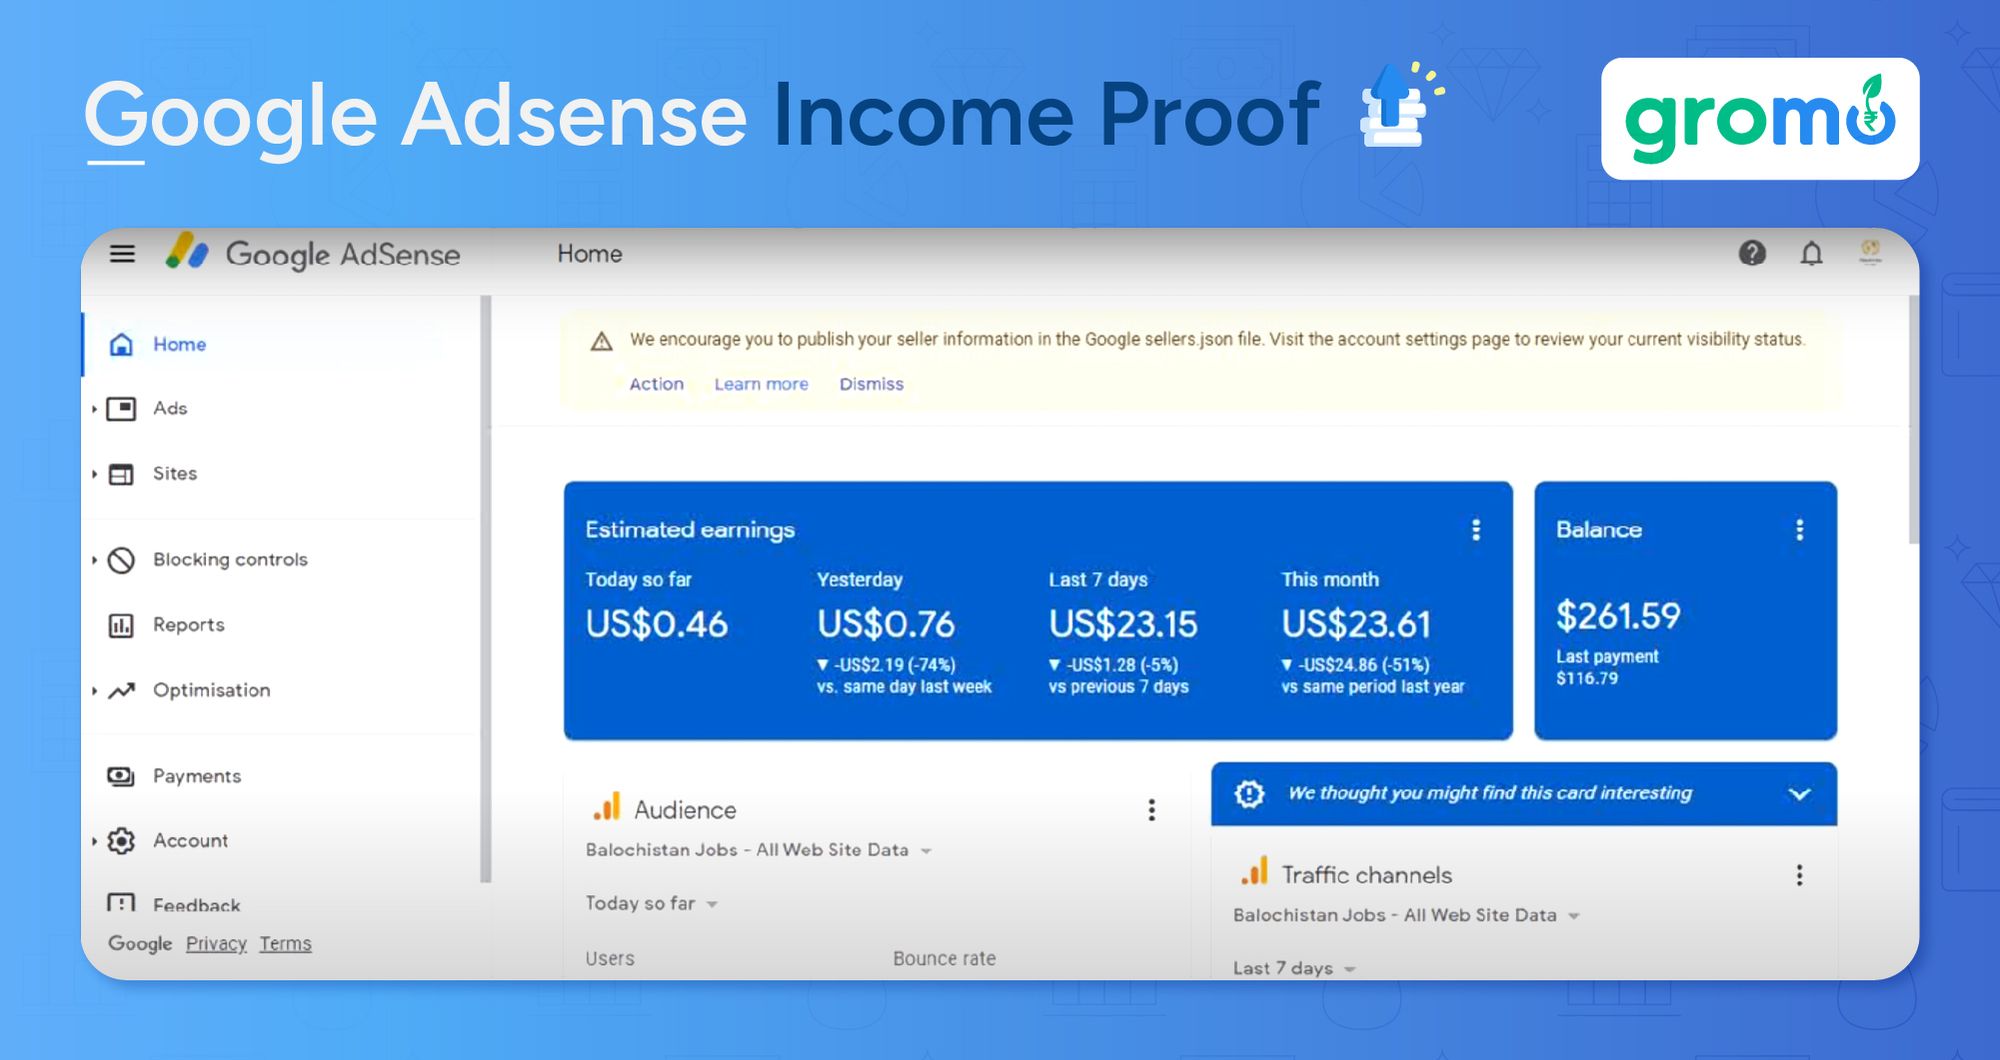 Google Adsense Income Proof - Best Ways to Make Money Online - GroMo